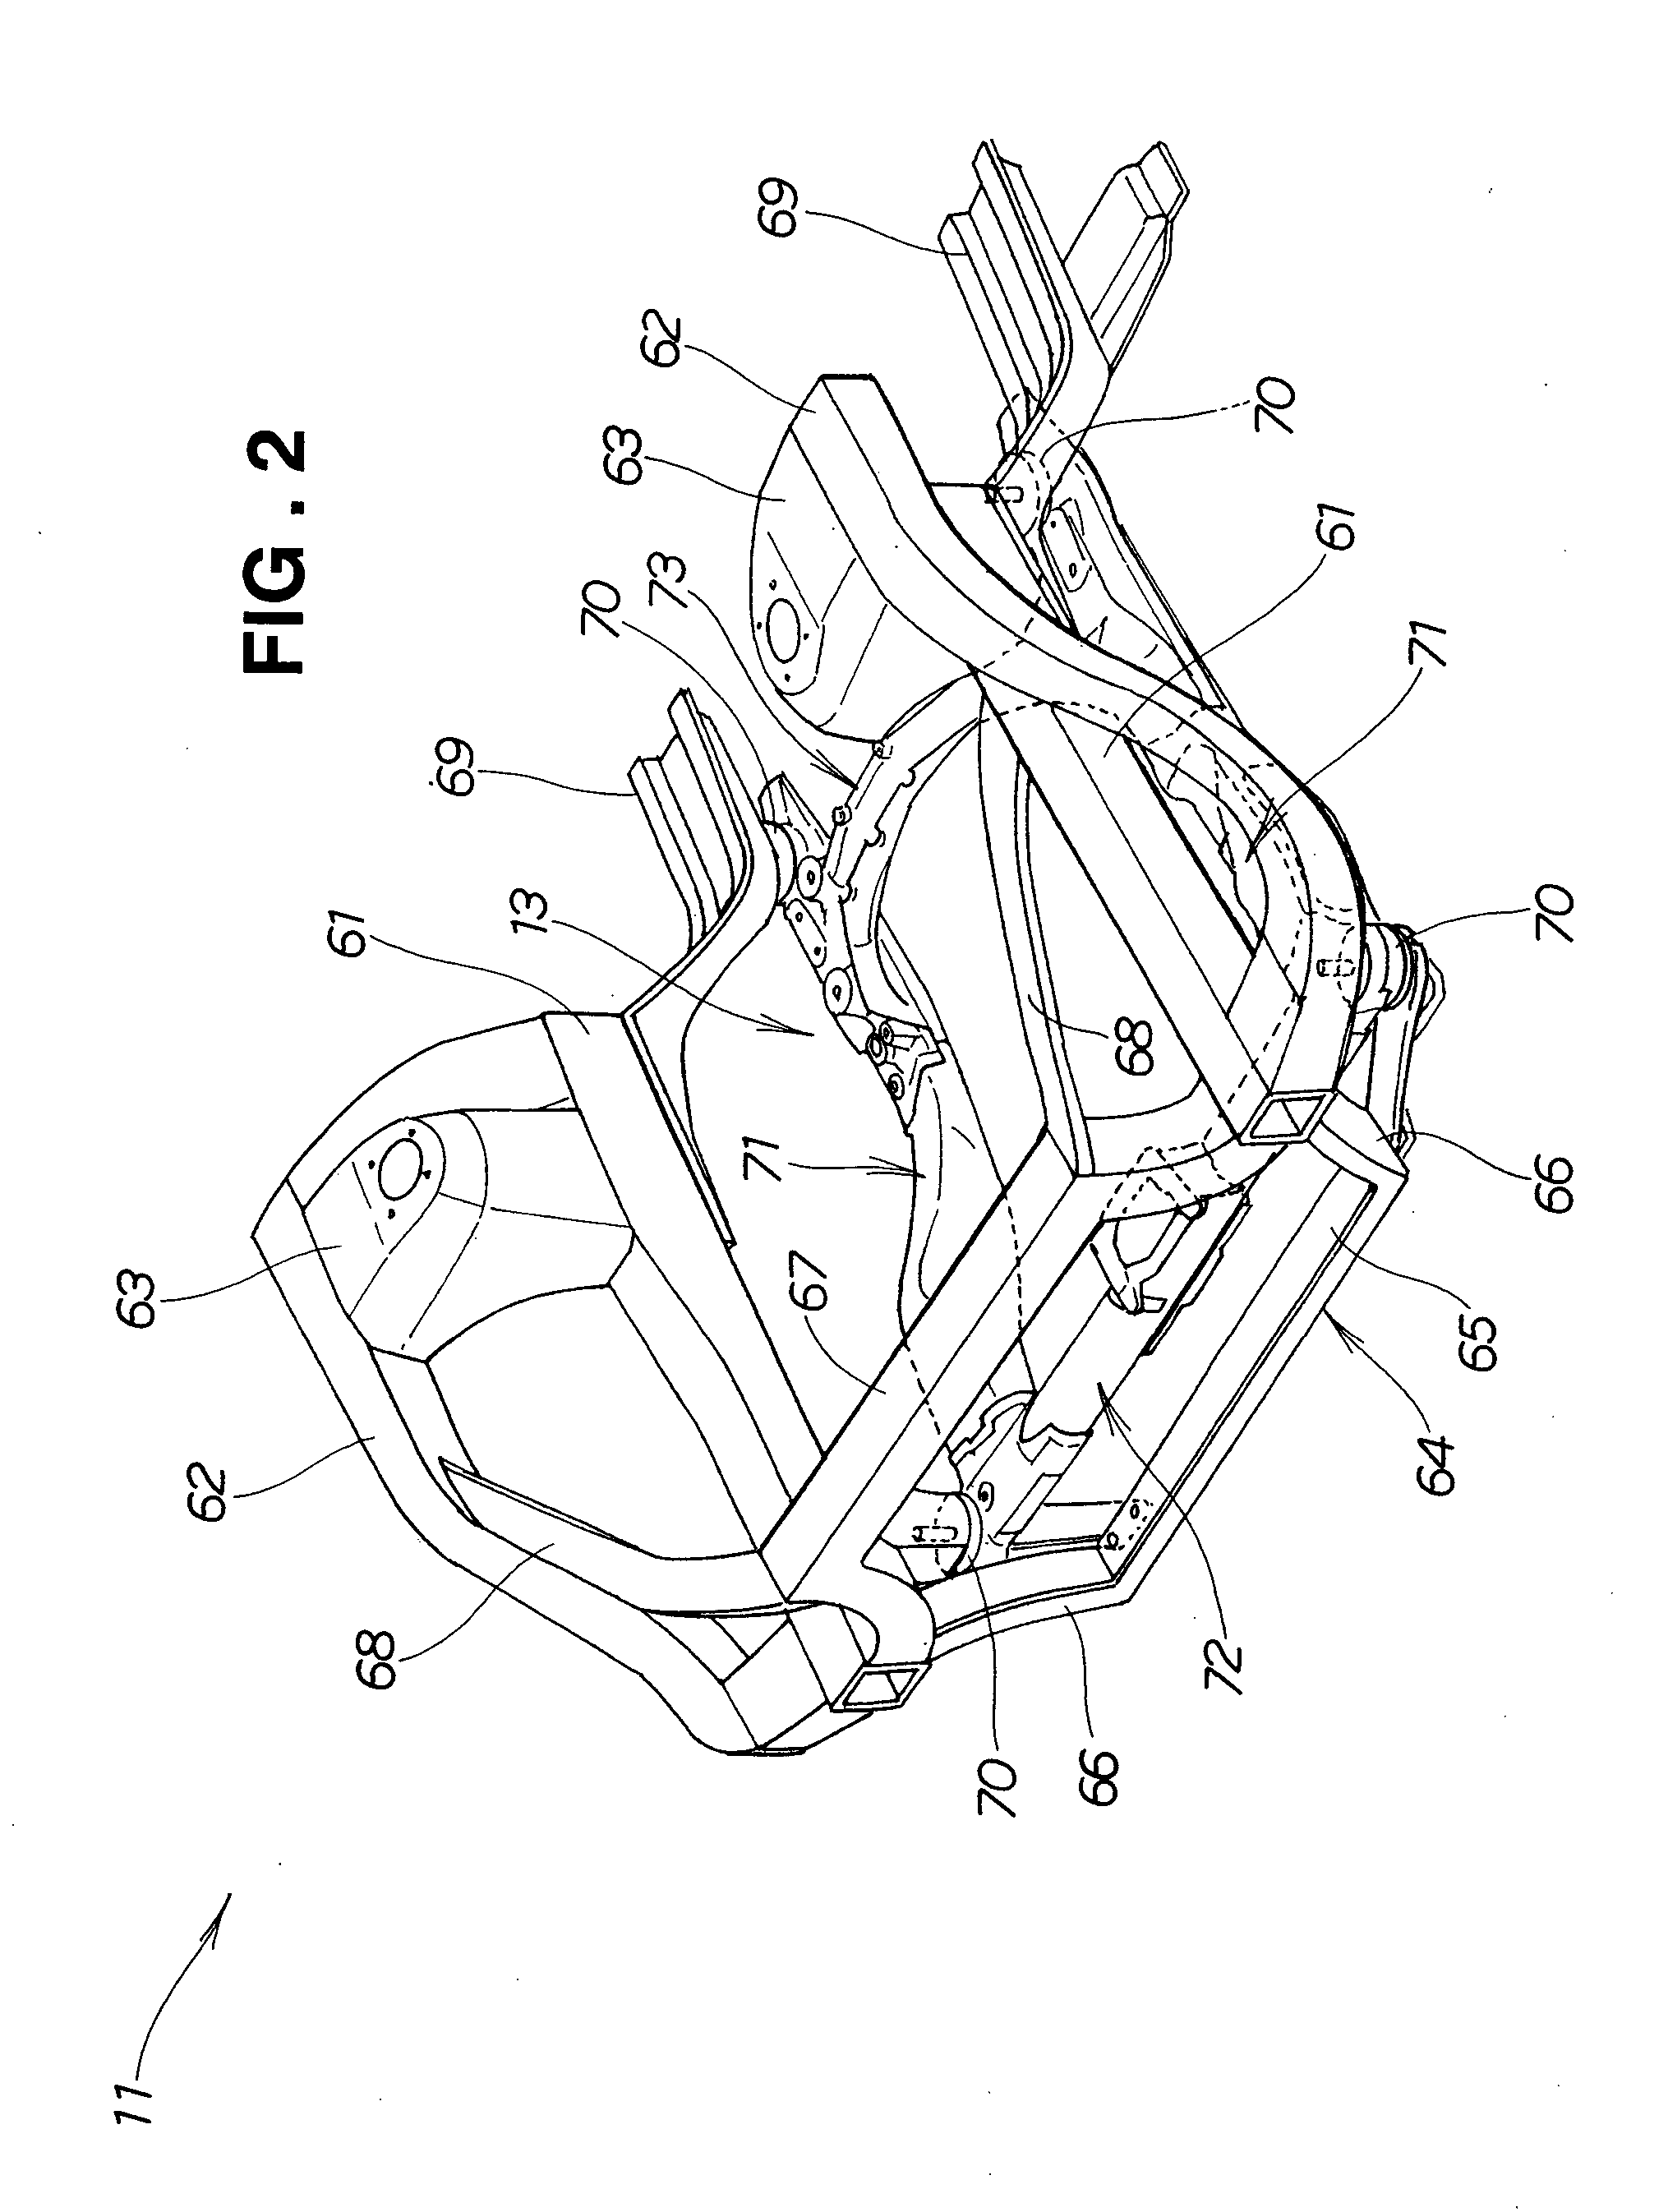 Engine mount system